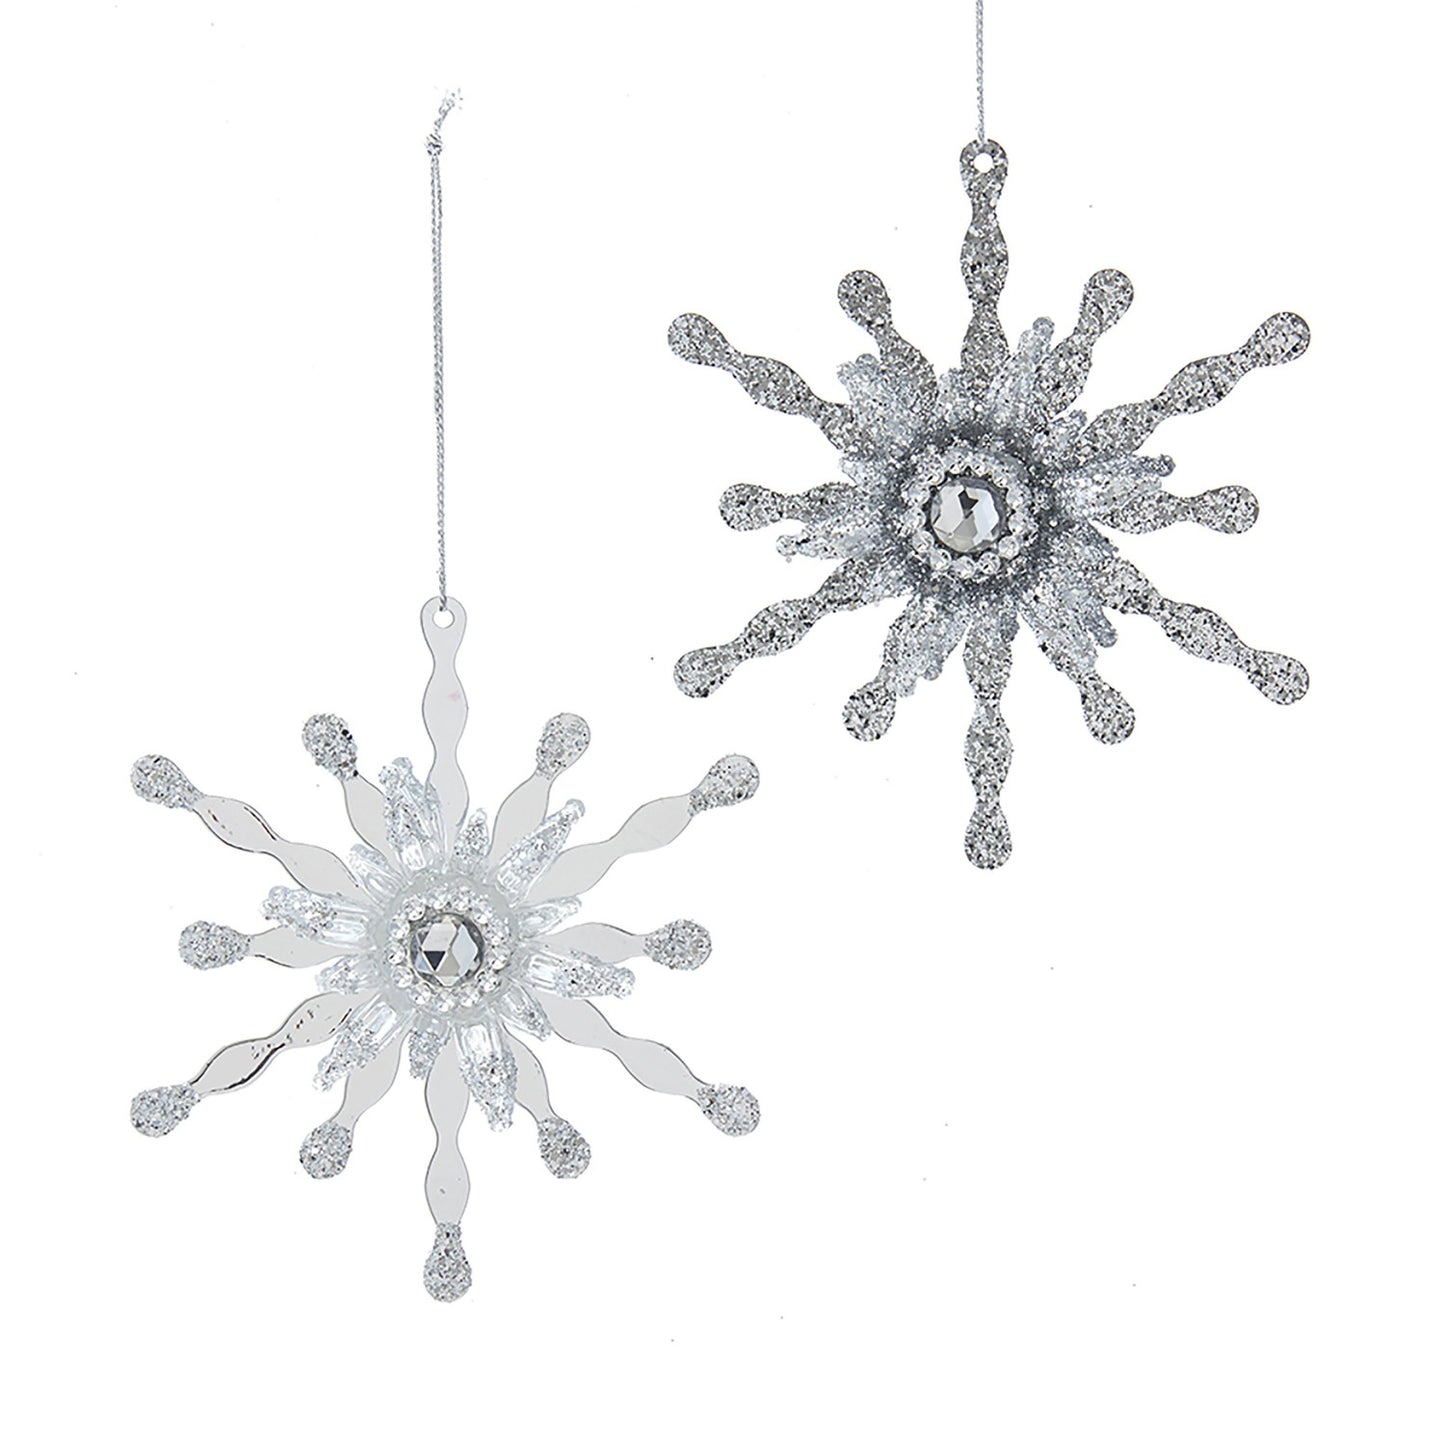 Kurt S Adler Snowflake Christmas Ornaments - Silver